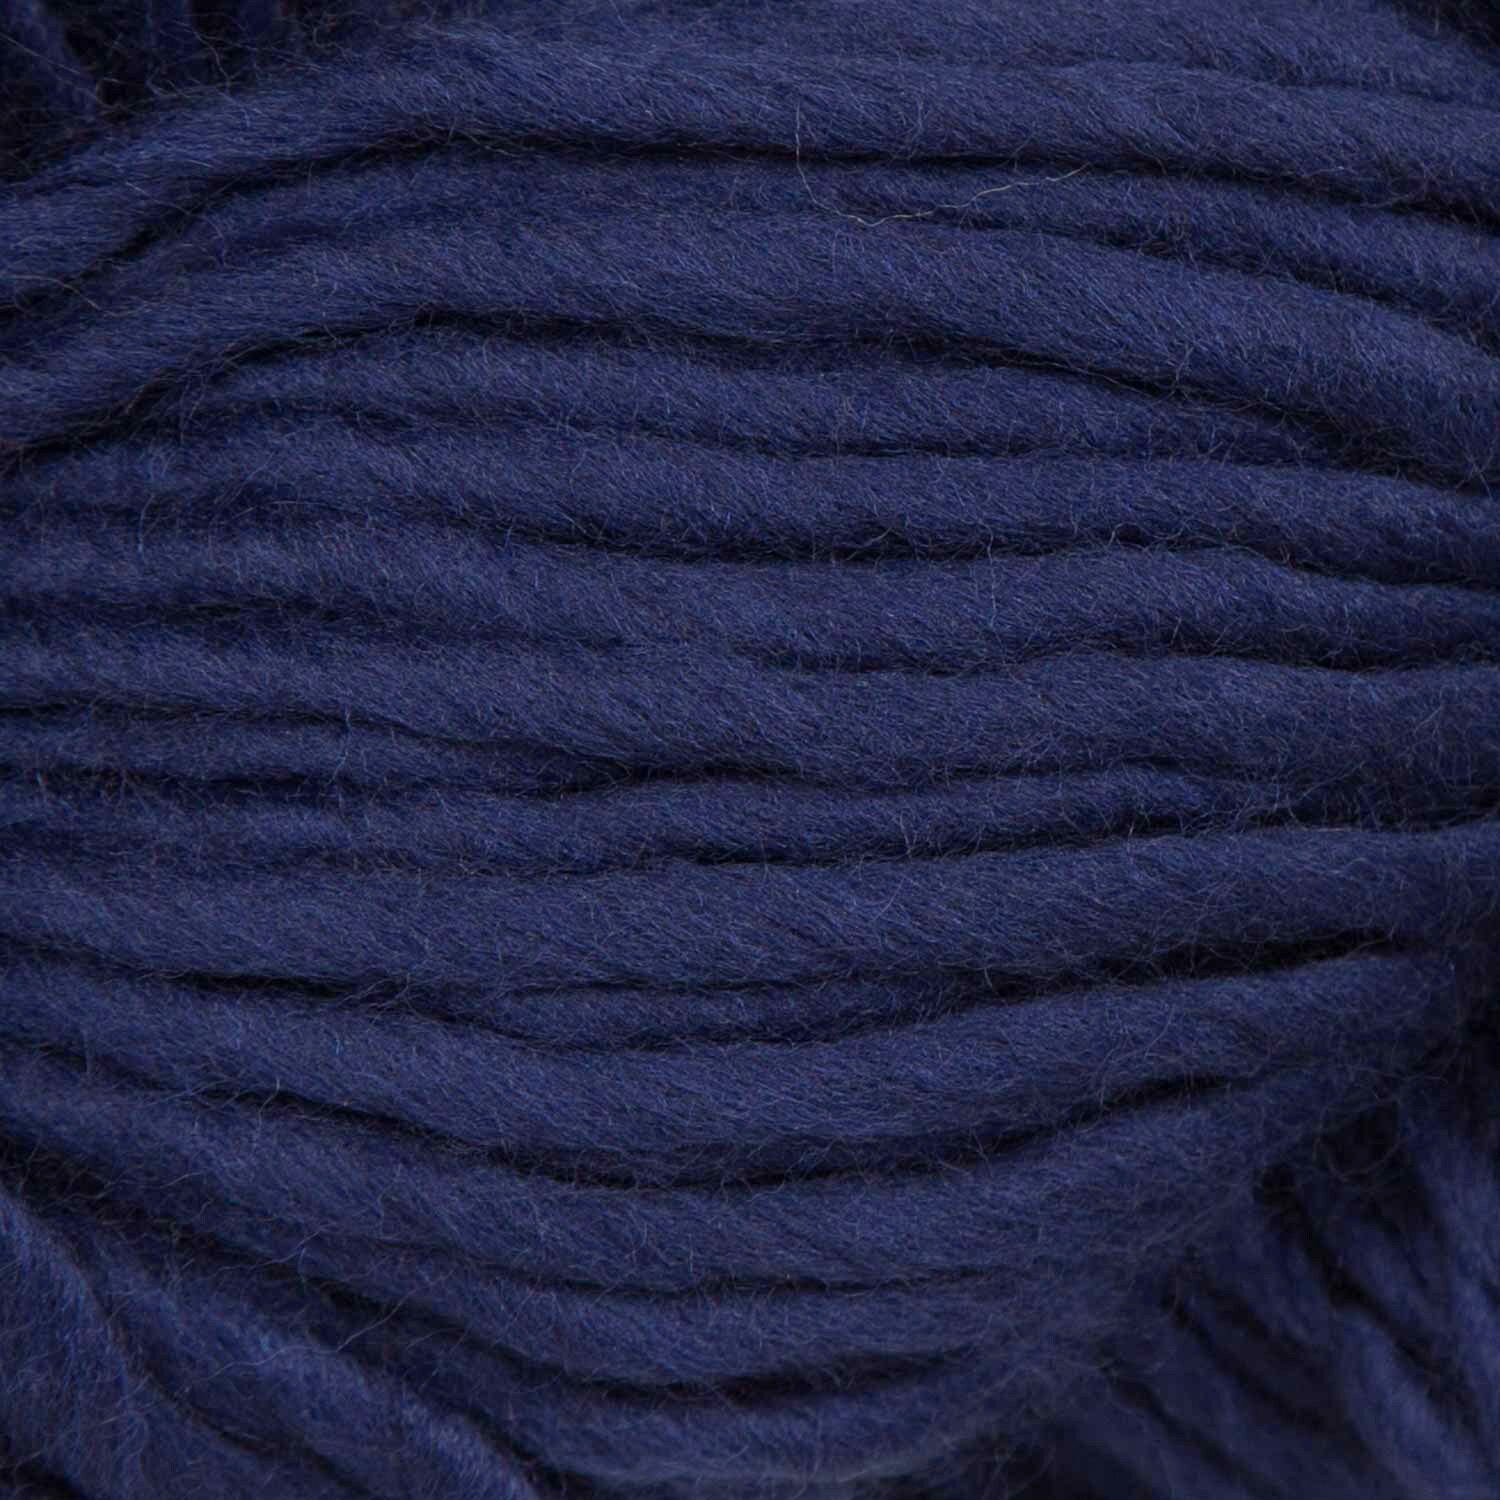 Aqua Super Chunky Yarn. Cheeky Chunky Yarn by Wool Couture. 100g